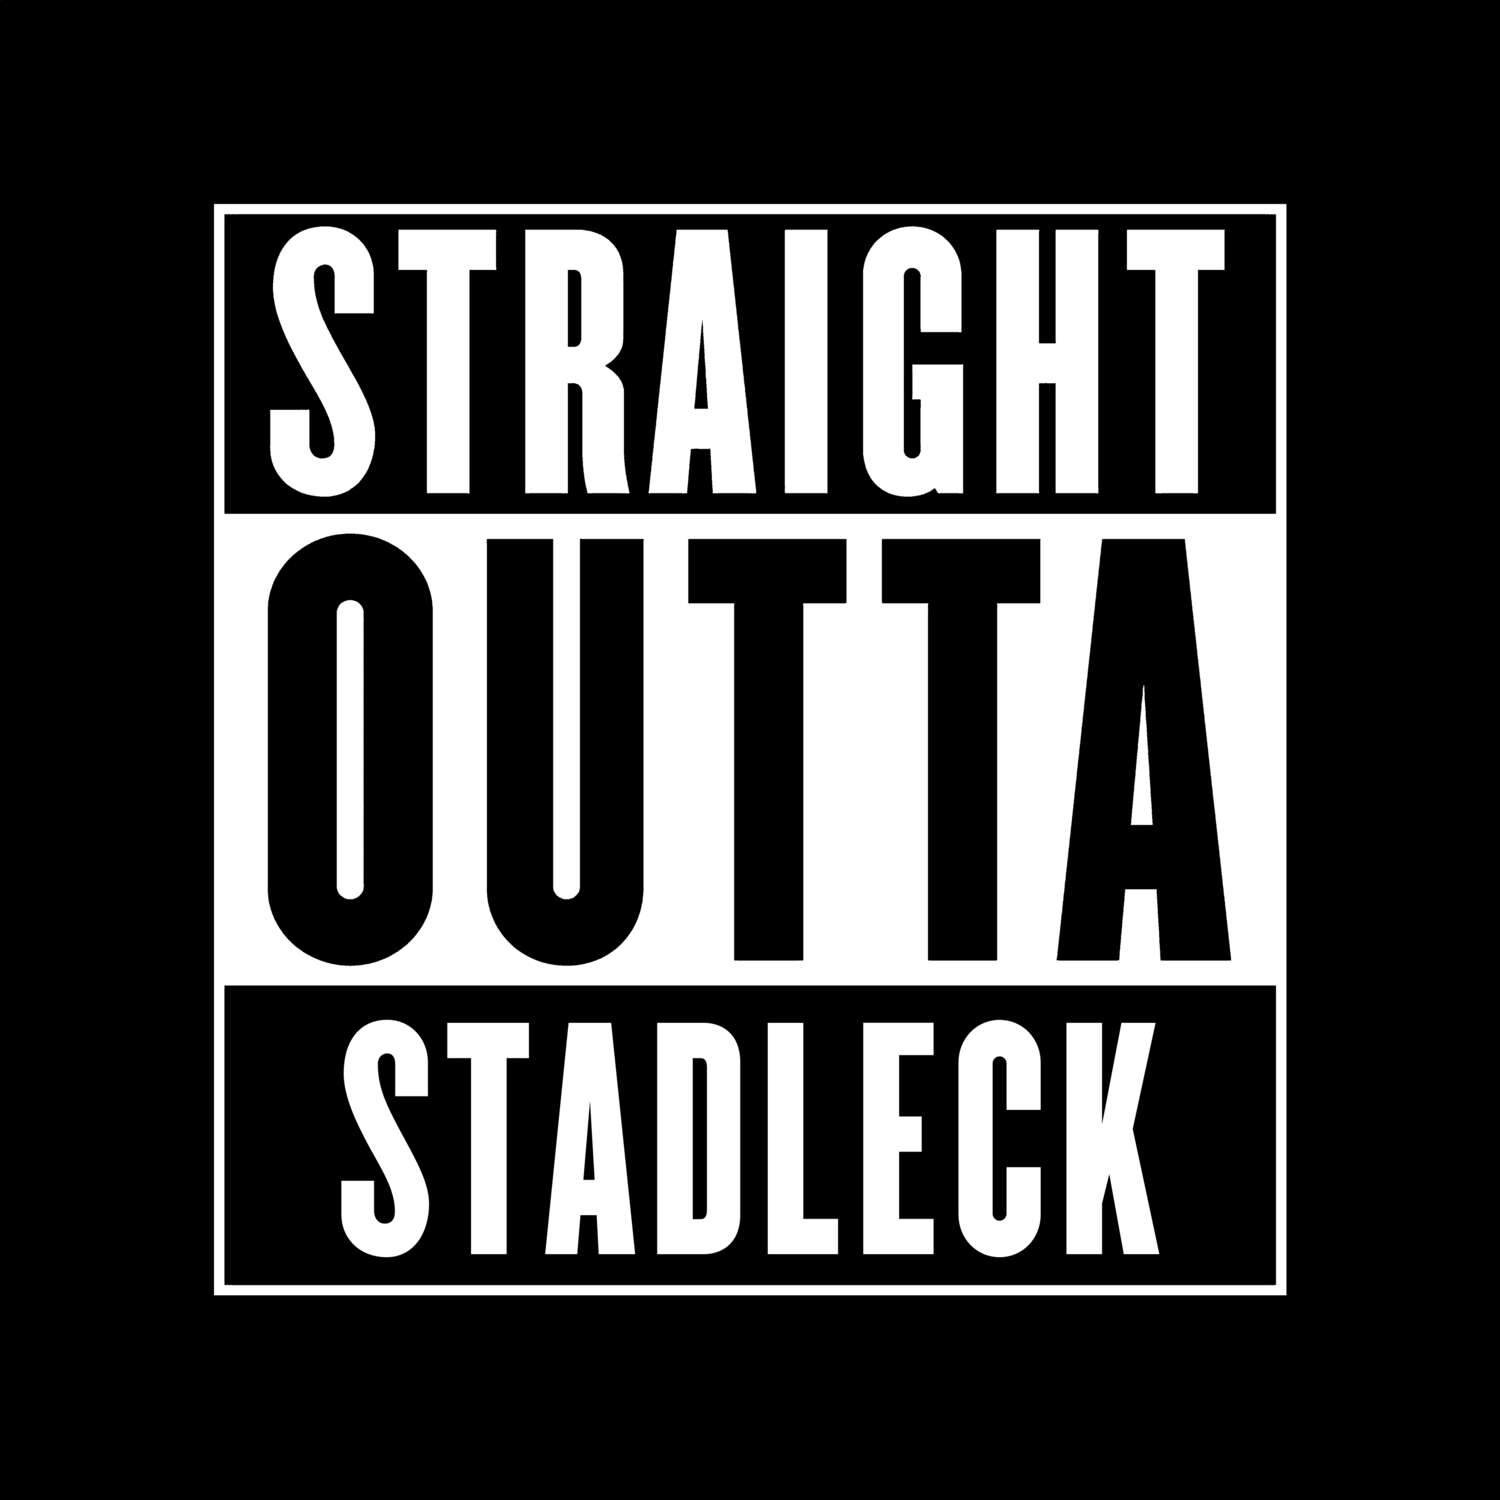 Stadleck T-Shirt »Straight Outta«